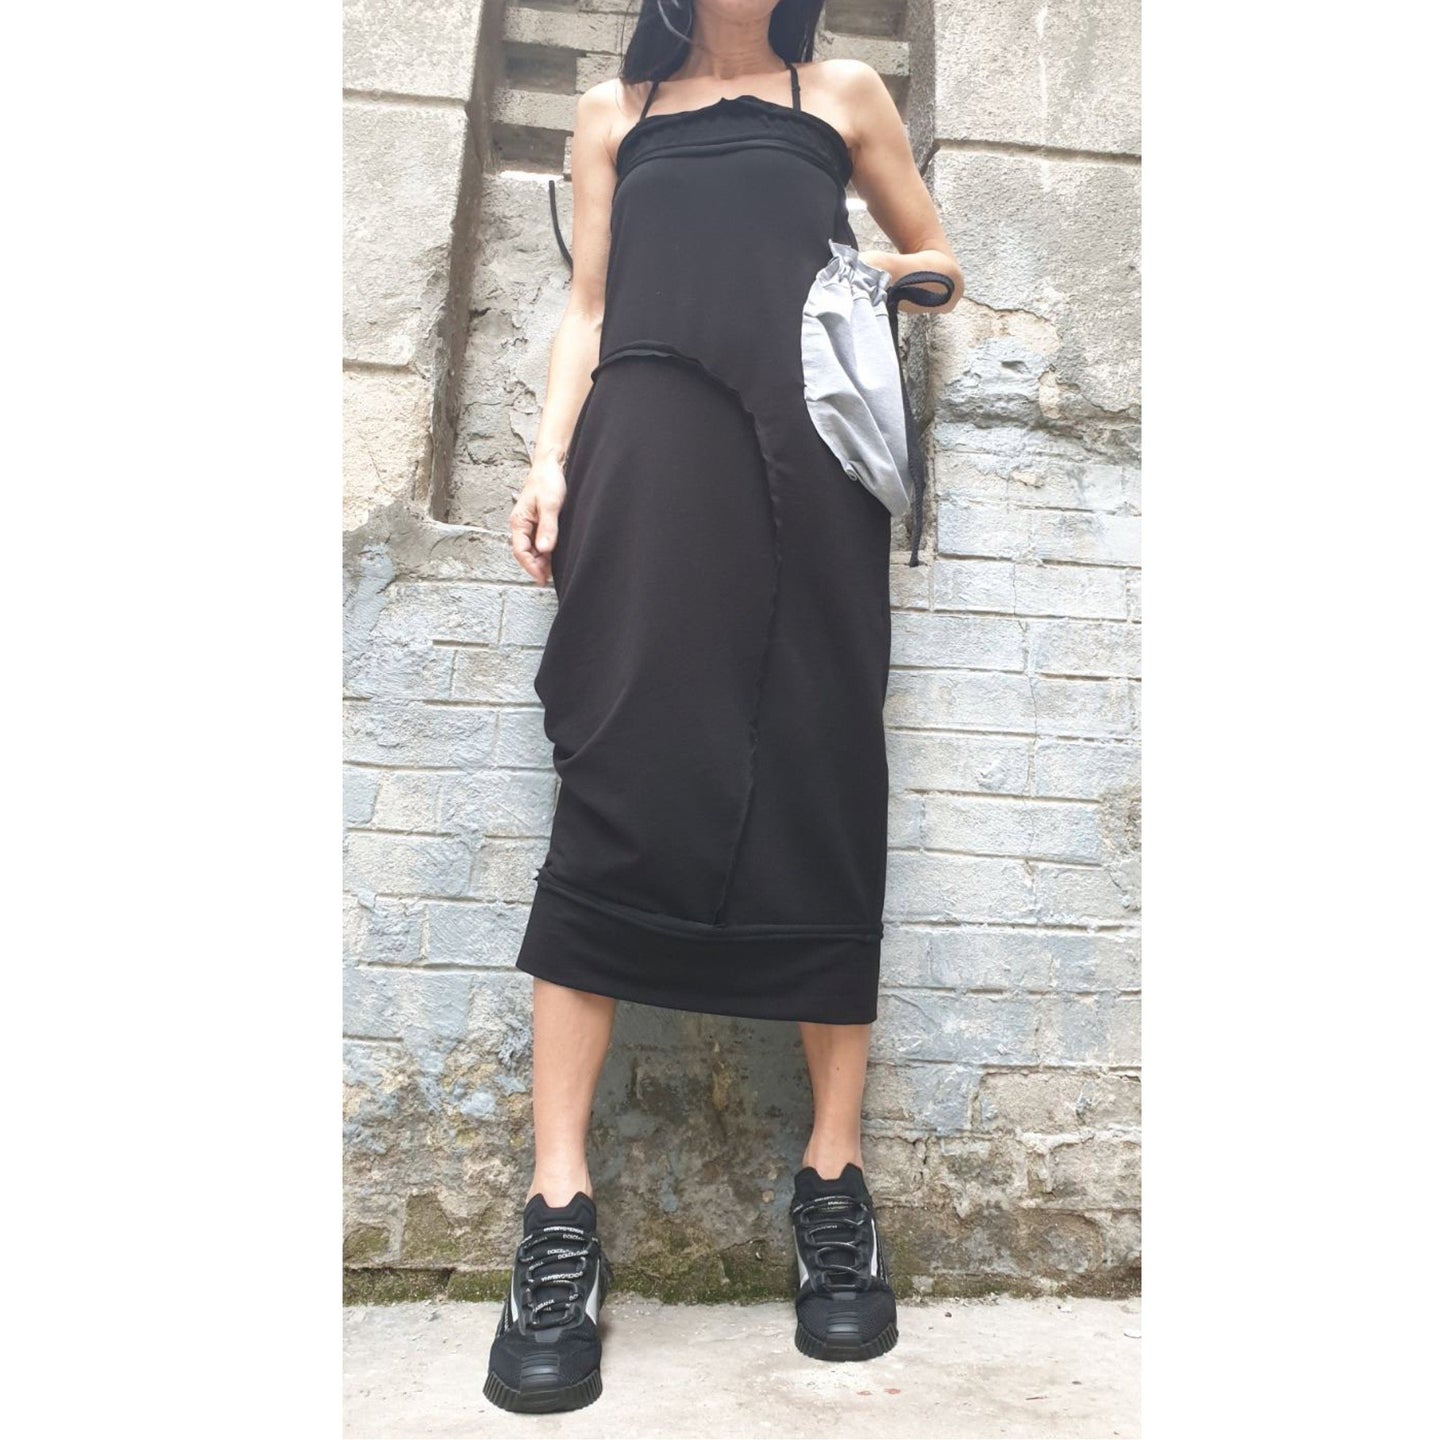 Sleeveless Dress - Handmade clothing from AngelBySilvia - Top Designer Brands 